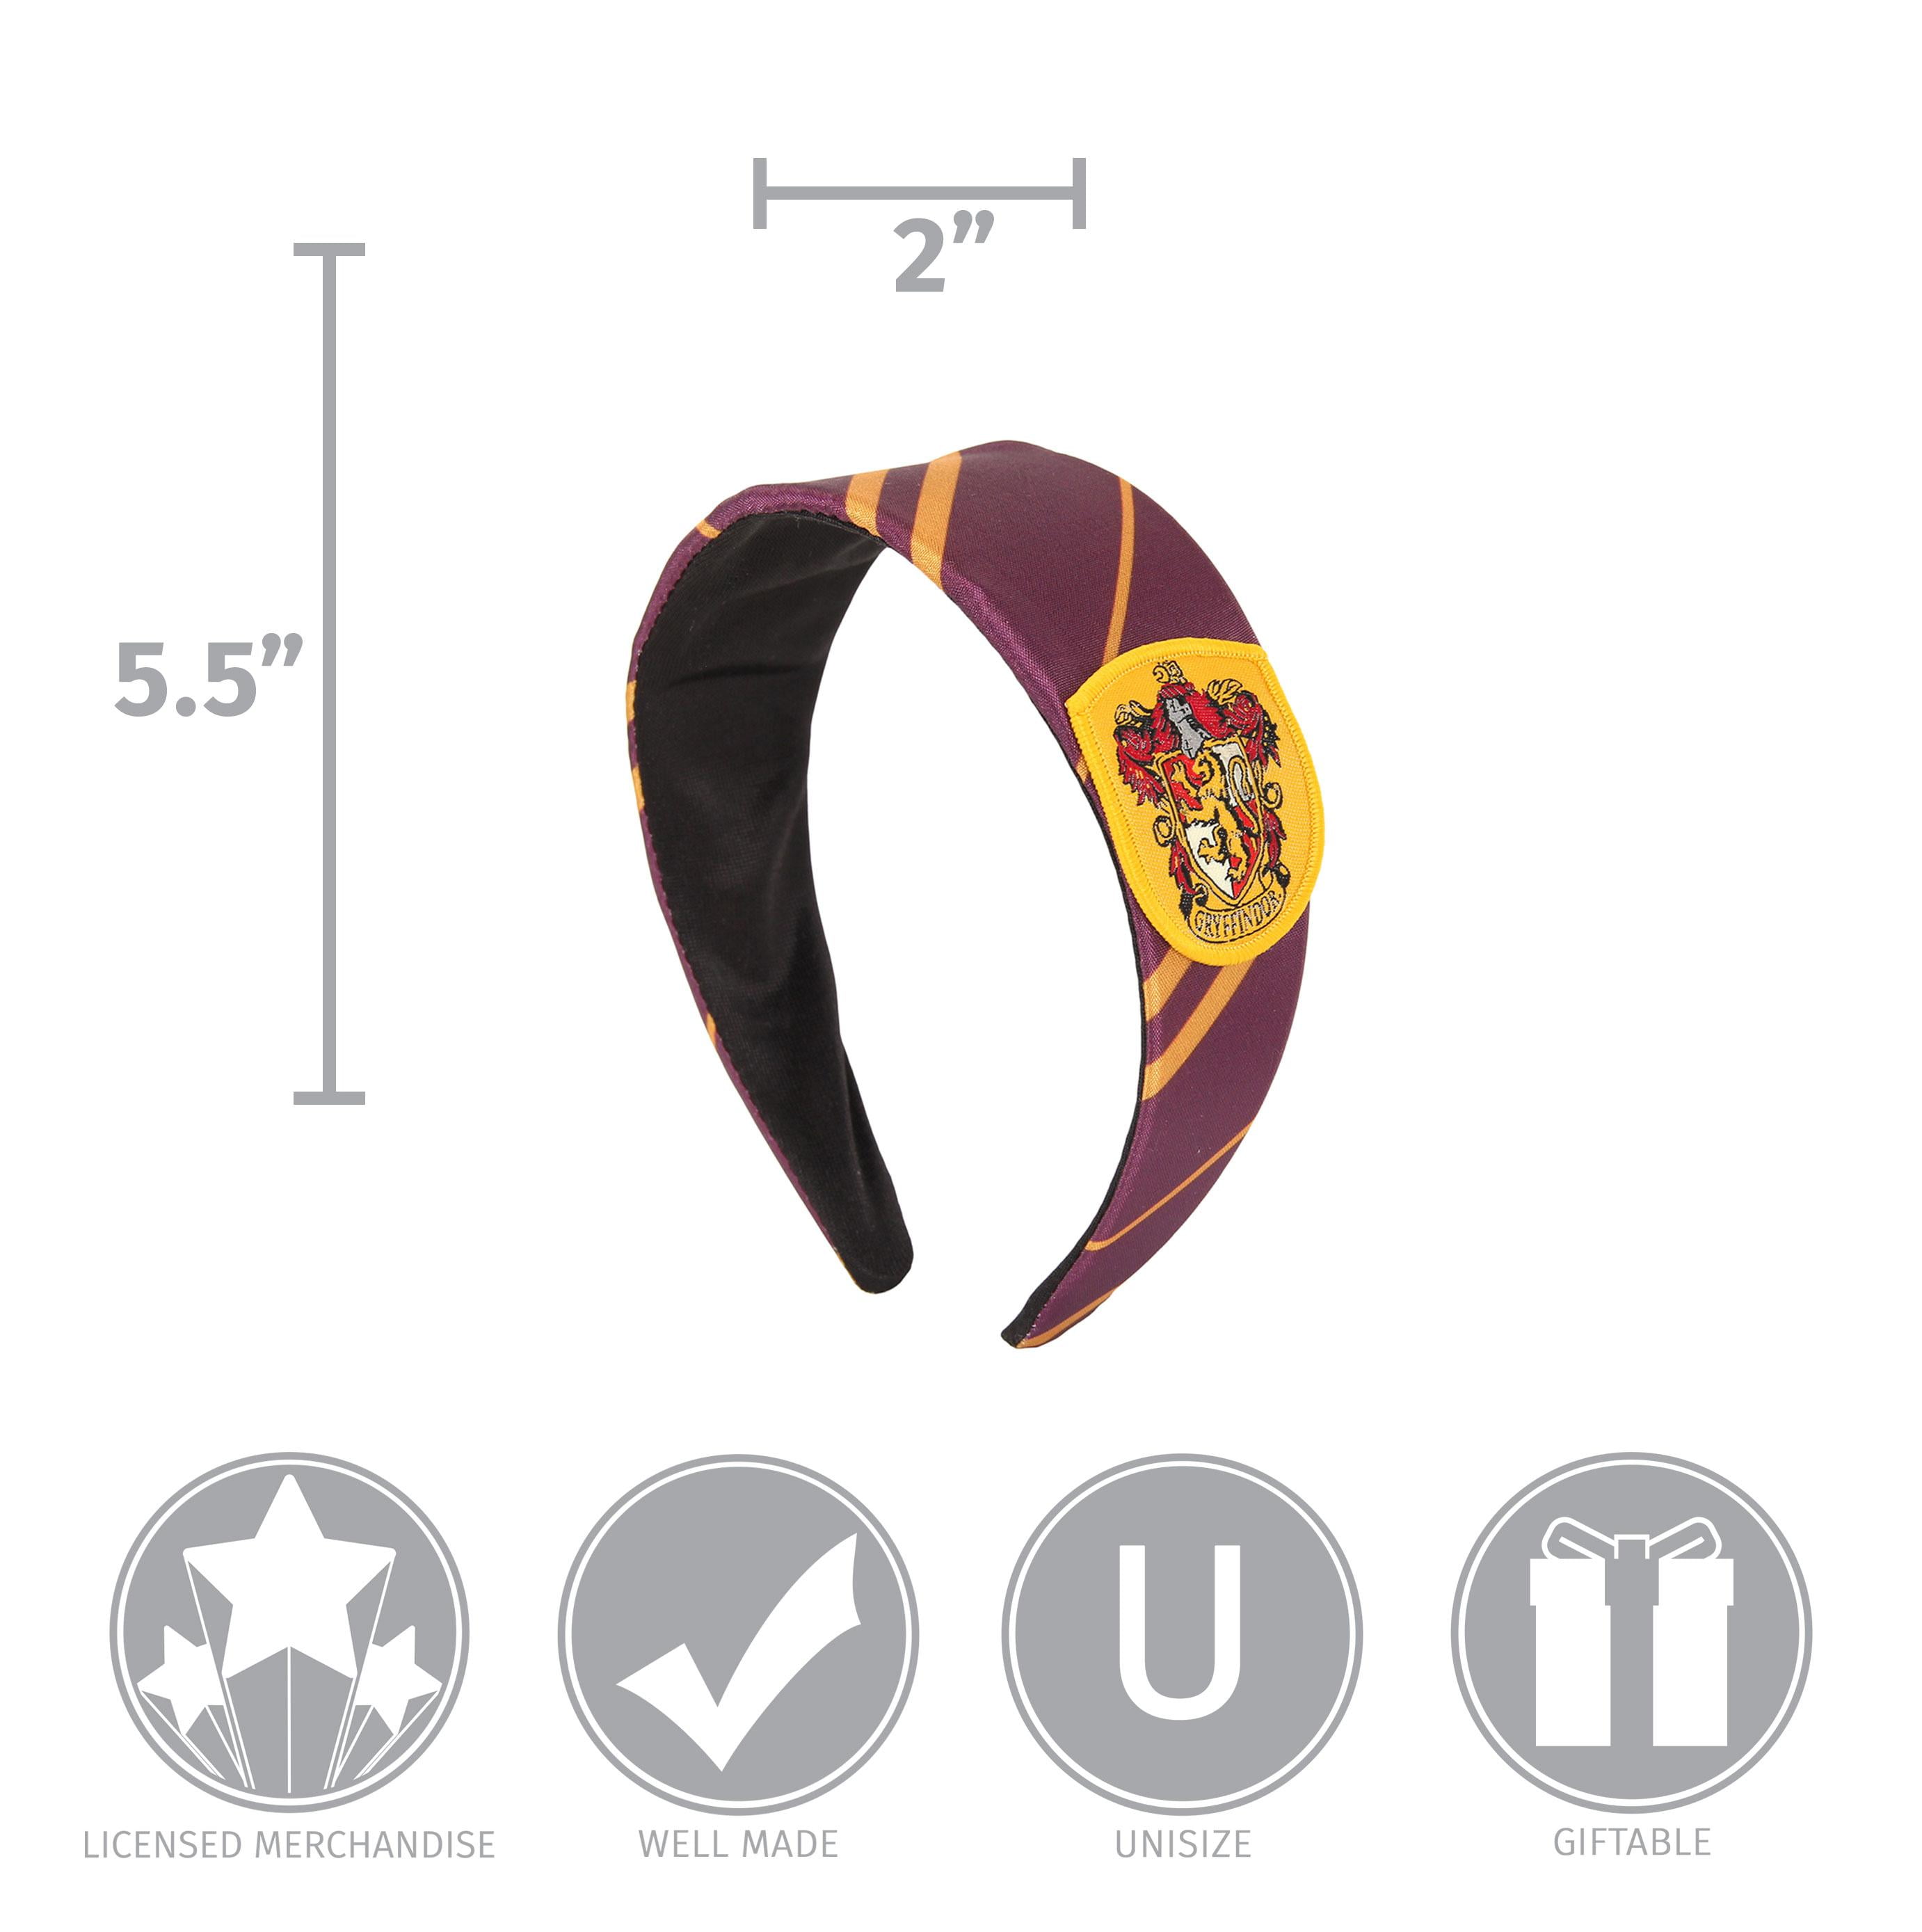 Harry Potter Gryffindor Headband - 2-Pack 